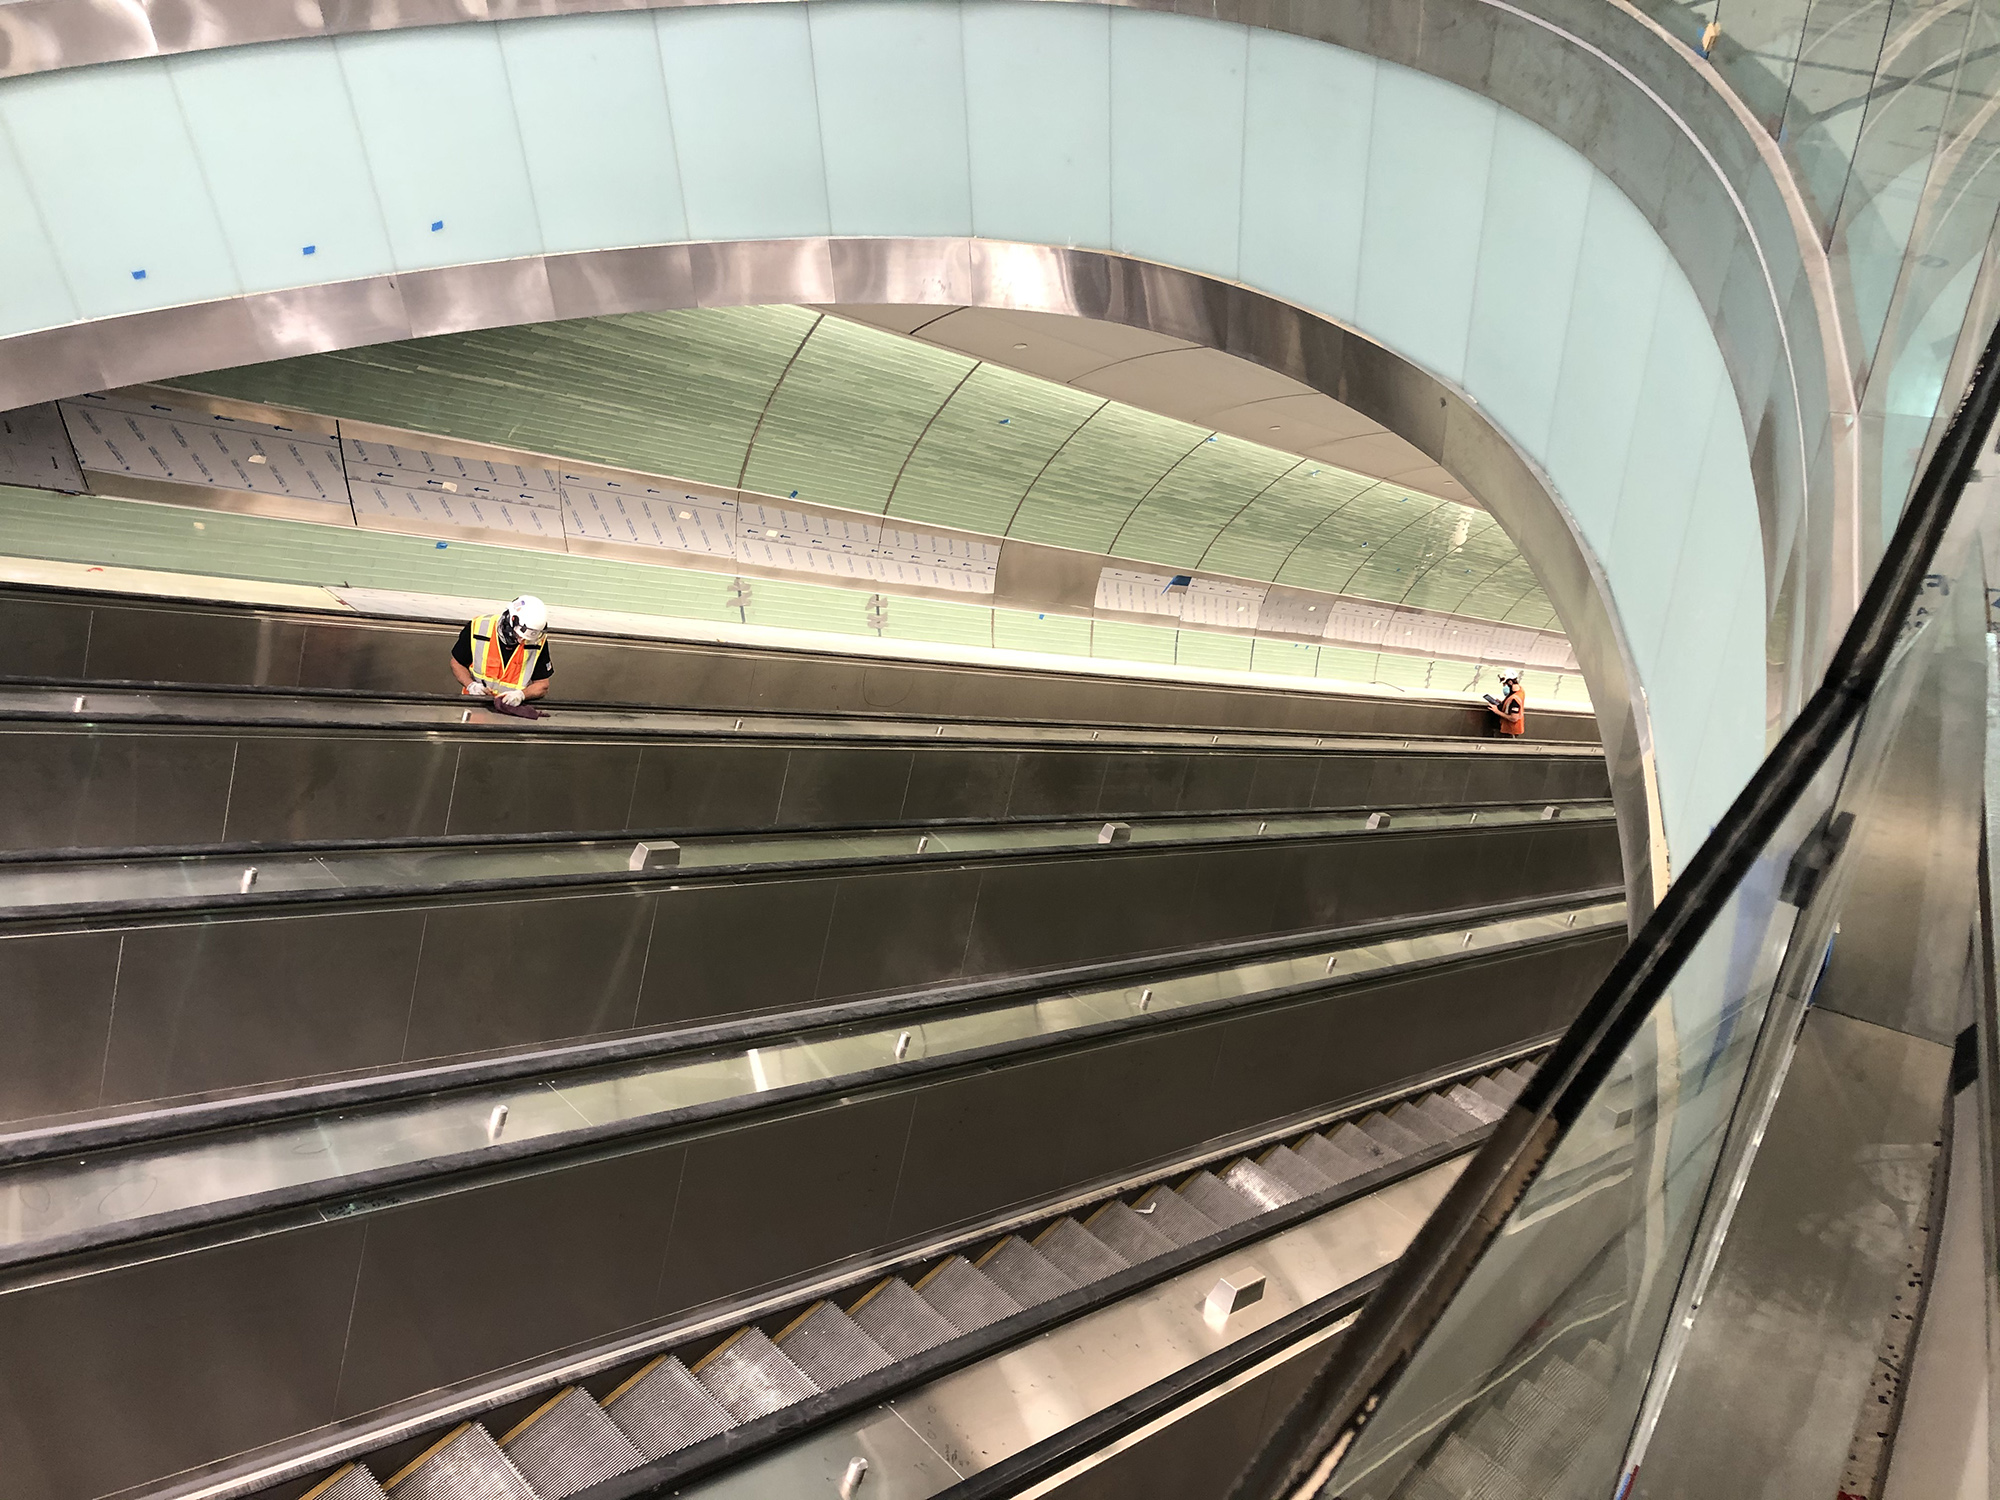 Cleaning escalator wellway, 2020 